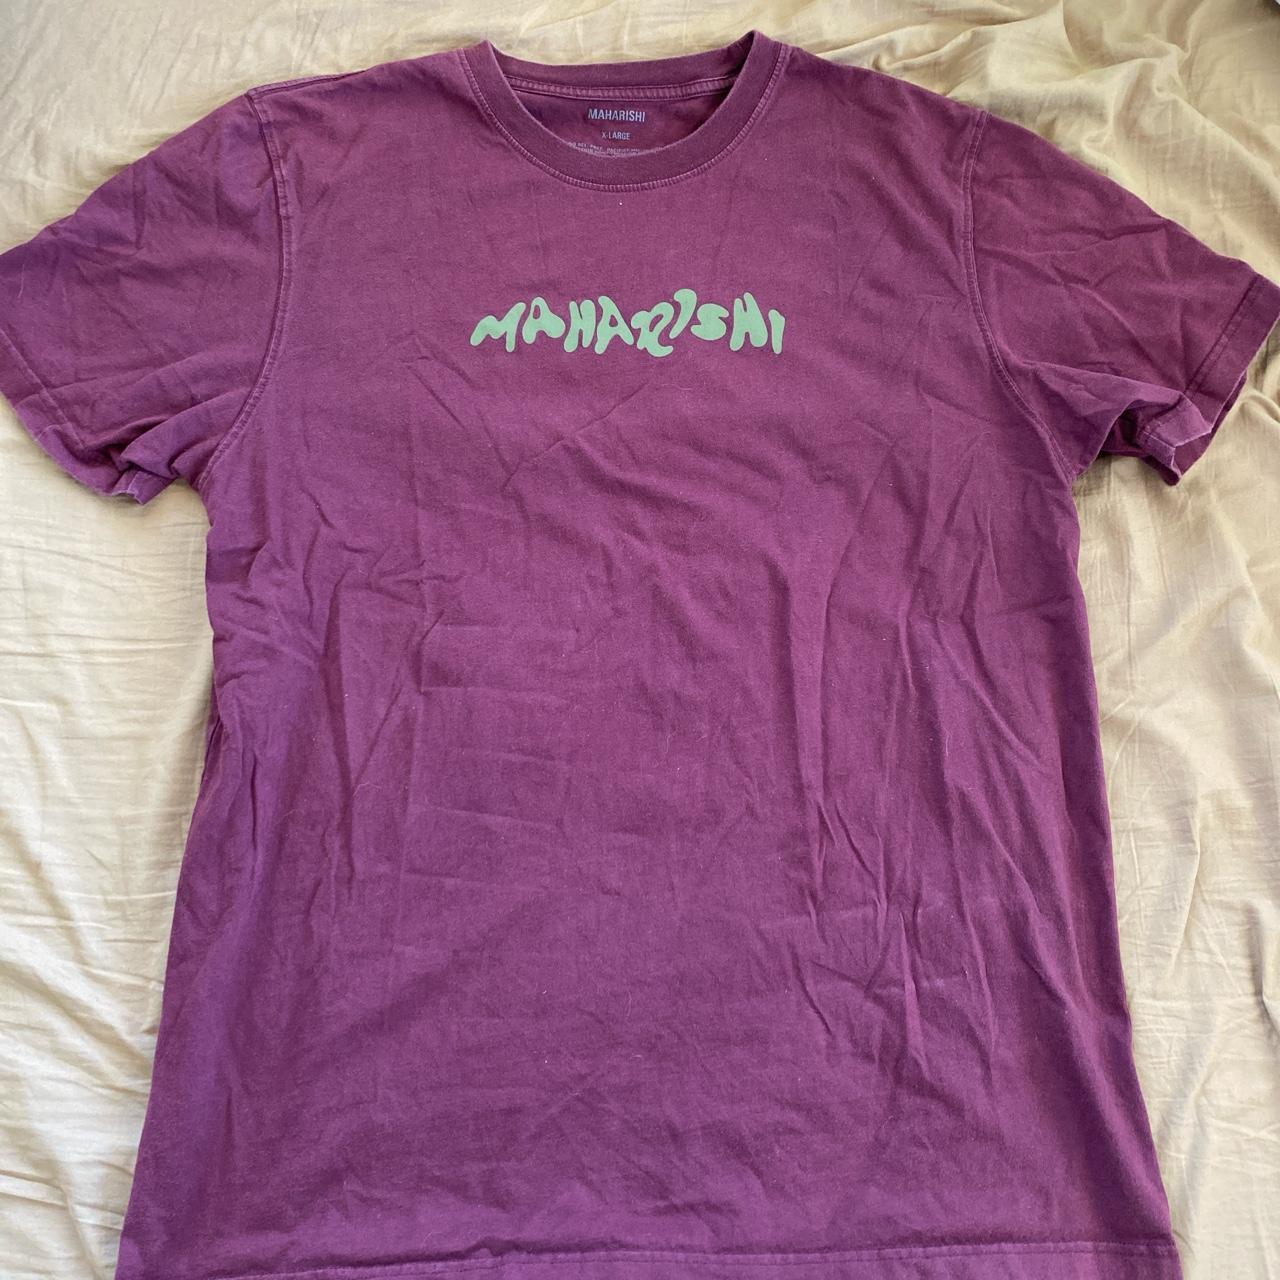 Product Image 1 - Sweet Maharishi tee shirt, in